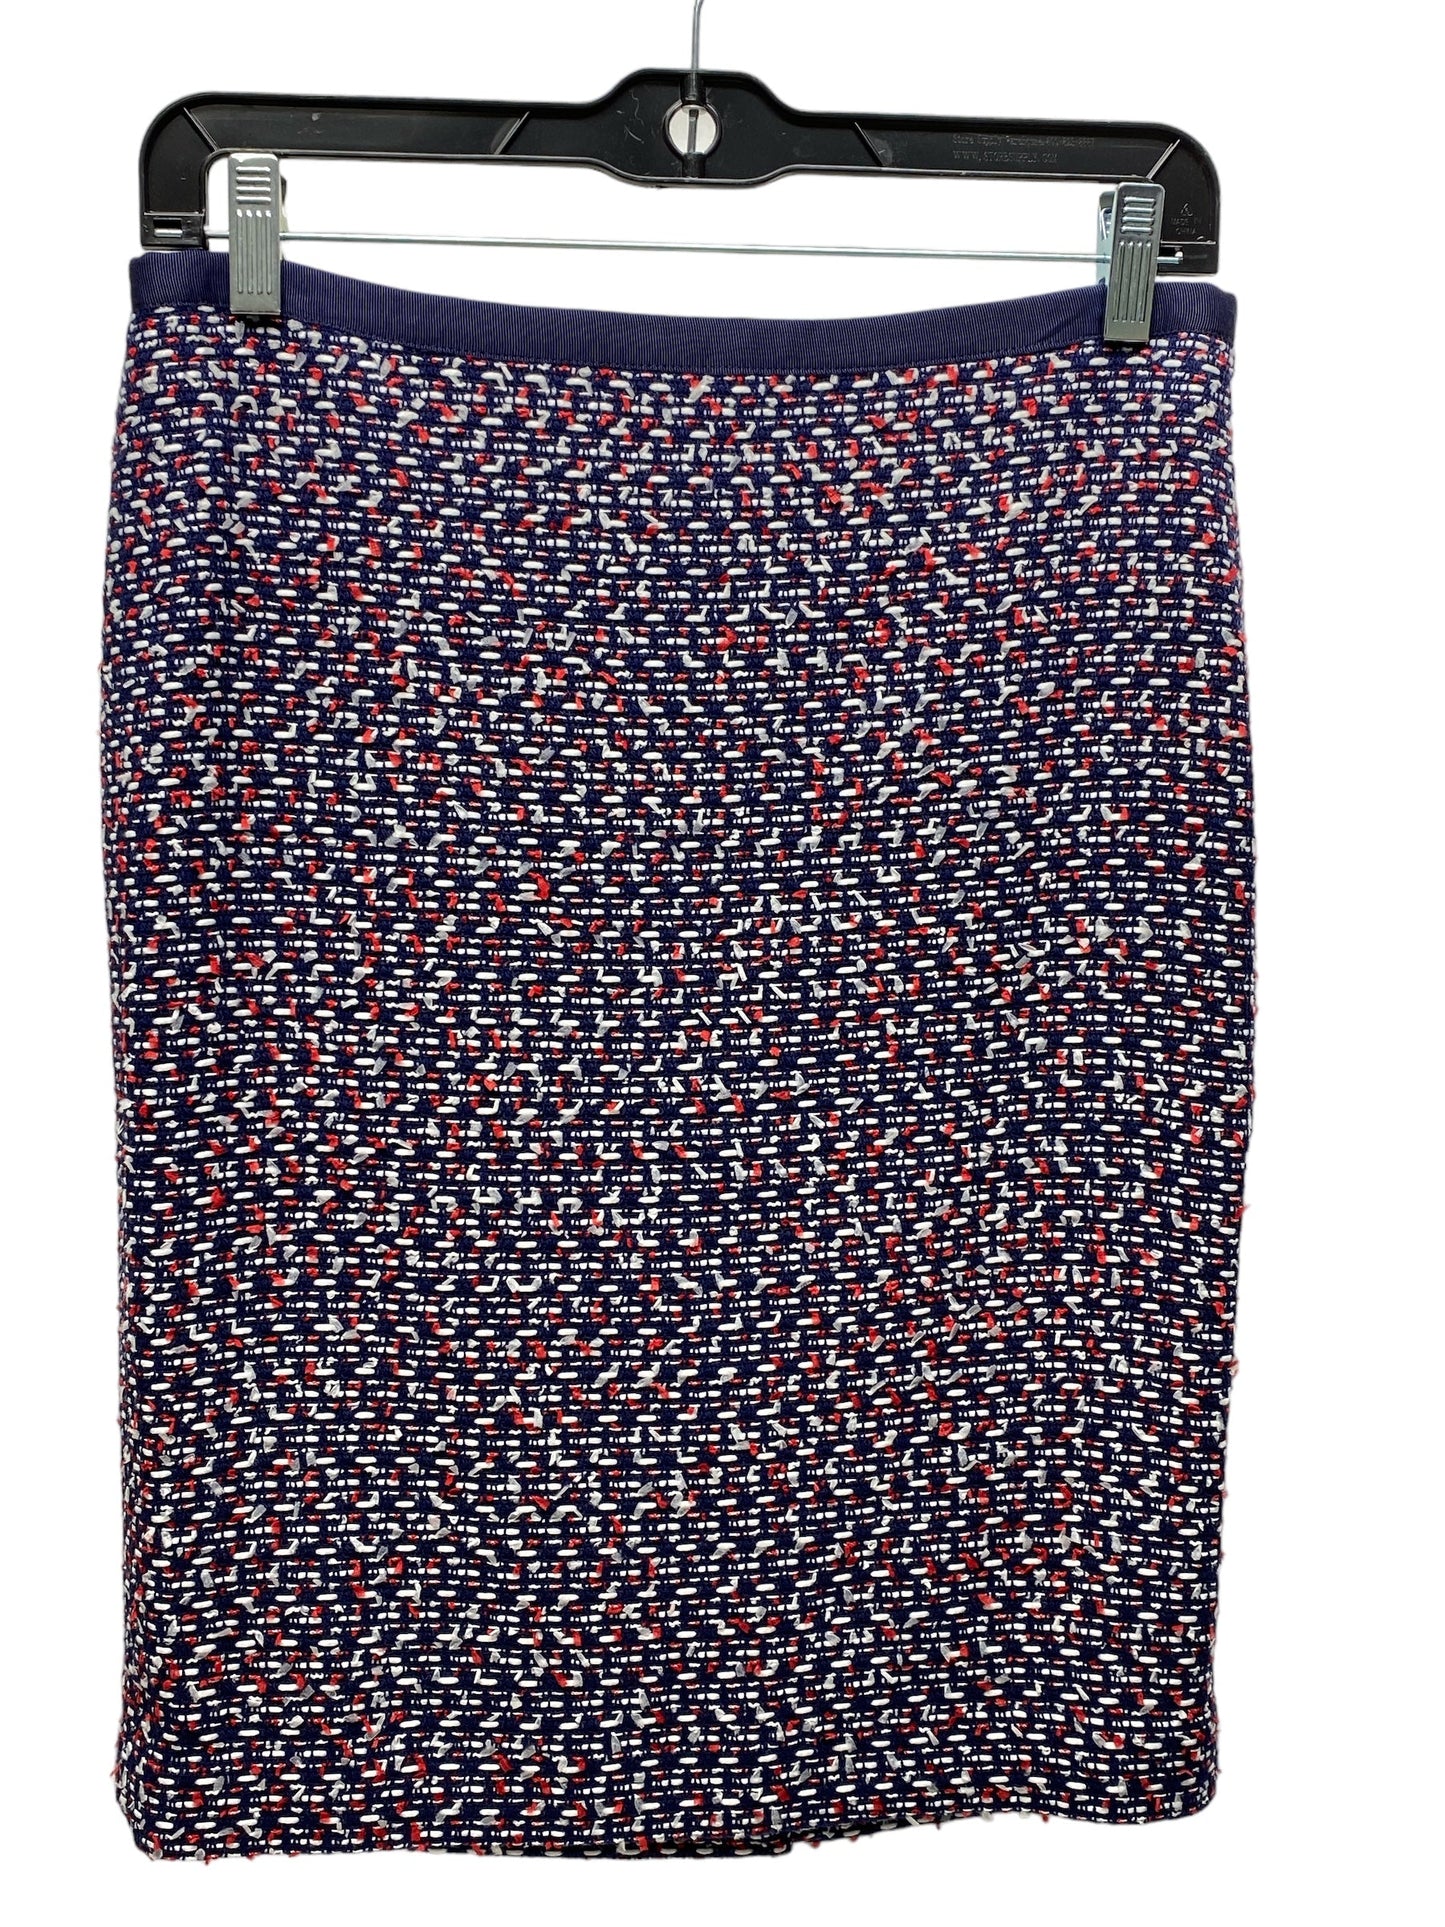 Skirt Mini & Short By Talbots  Size: 4petite